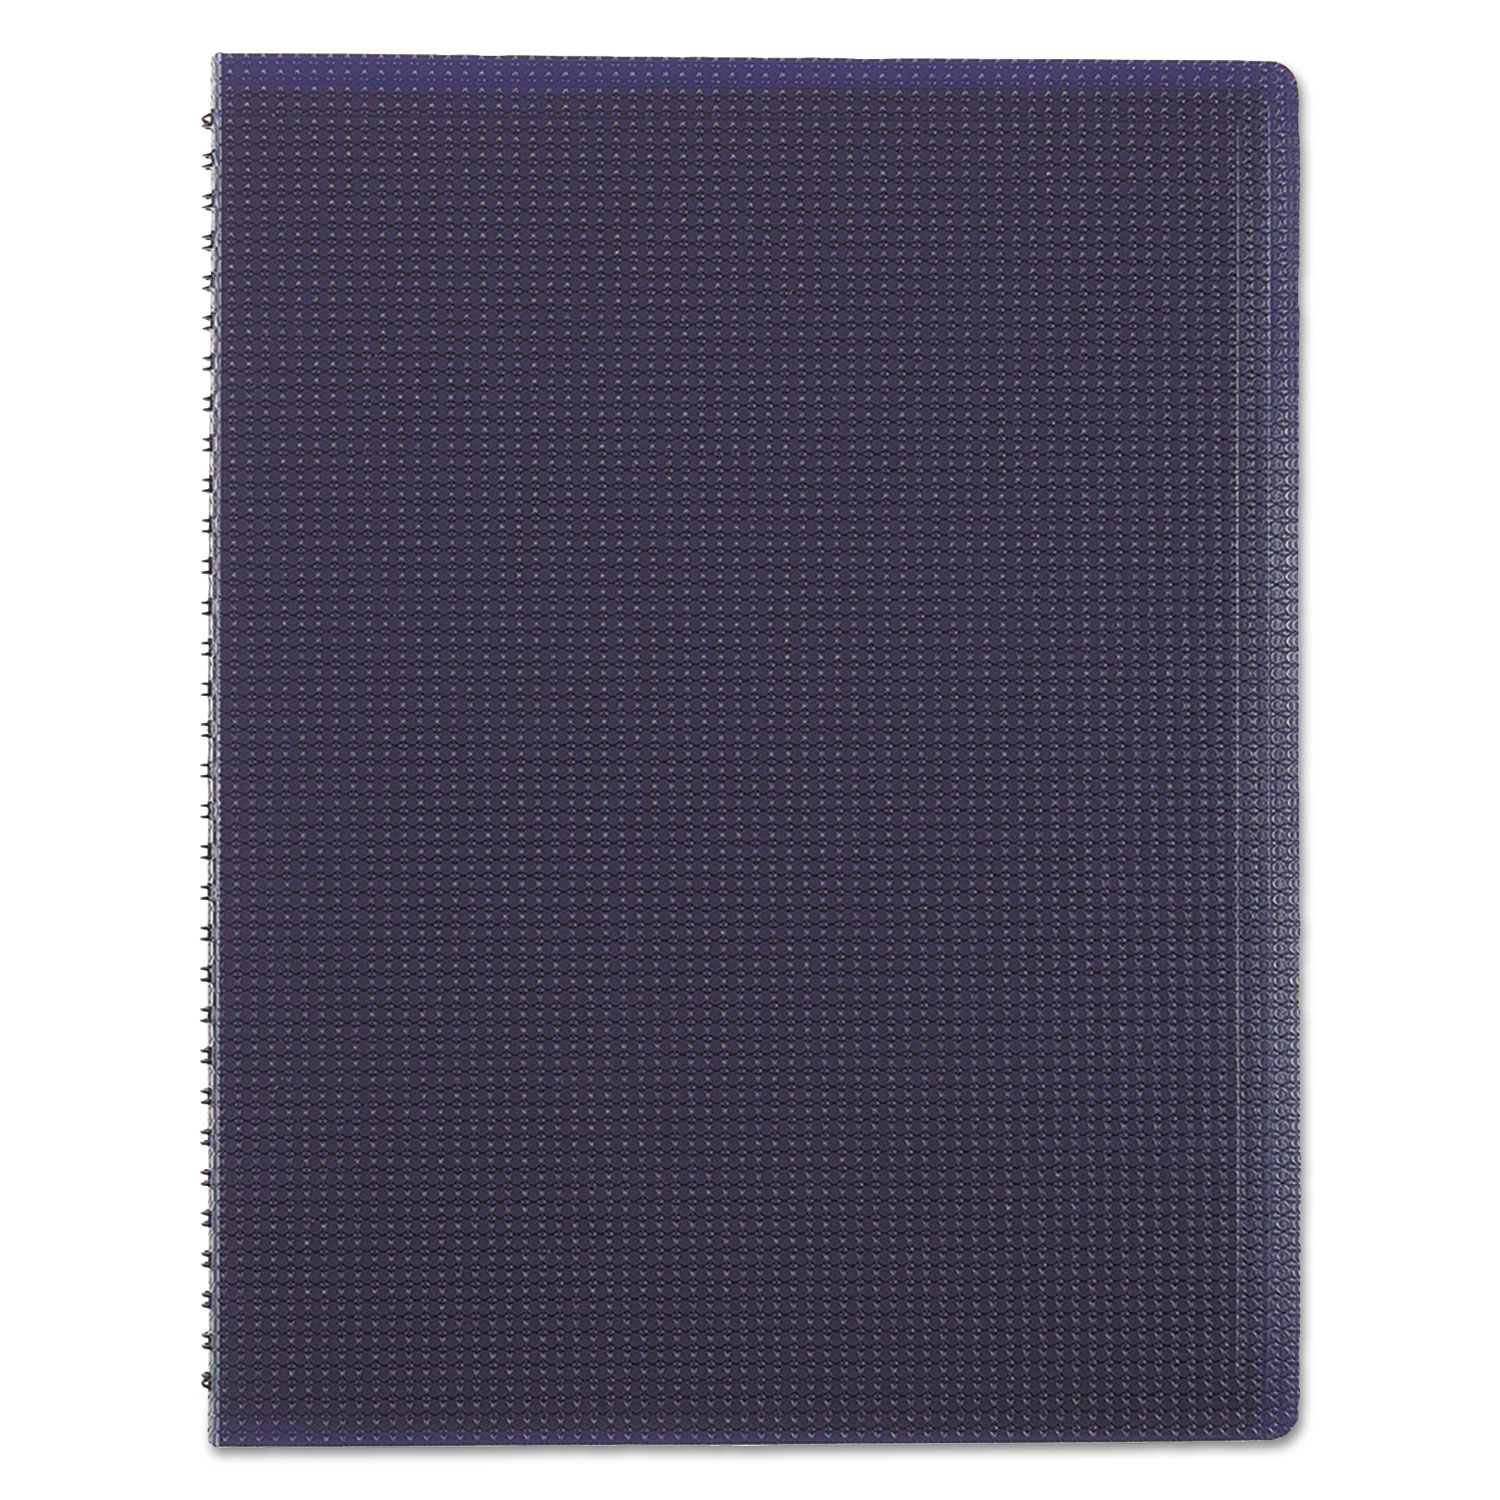  Blueline B41.82 Duraflex Poly Notebook, 1 Subject, Medium/College Rule, Blue Cover, 11 x 8.5, 80 Sheets (REDB4182) 